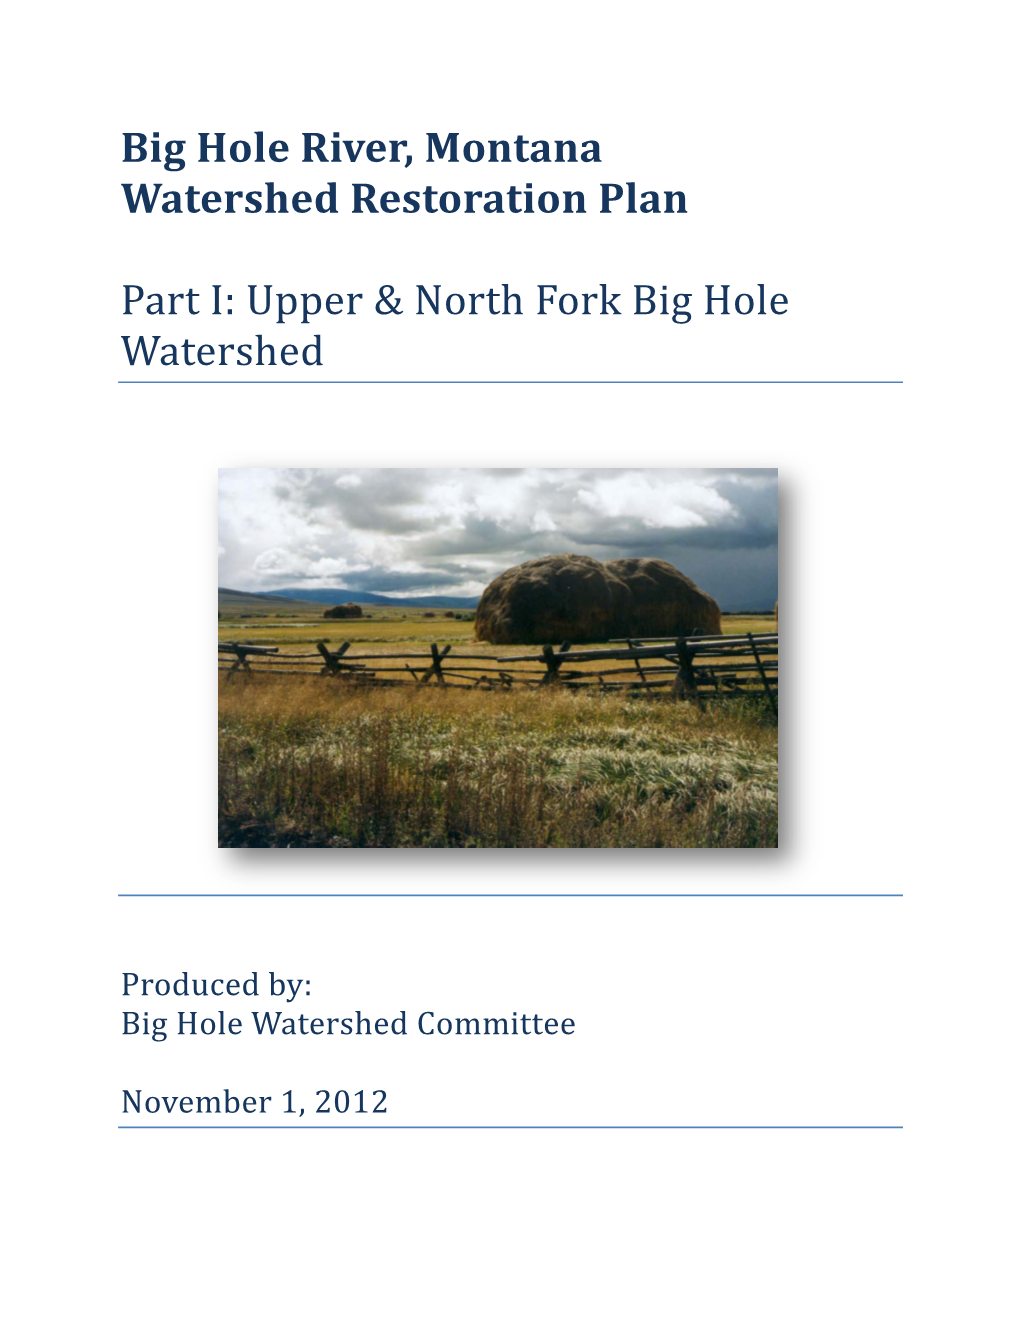 Upper and North Fork Big Hole River Watershed Restoration Plan